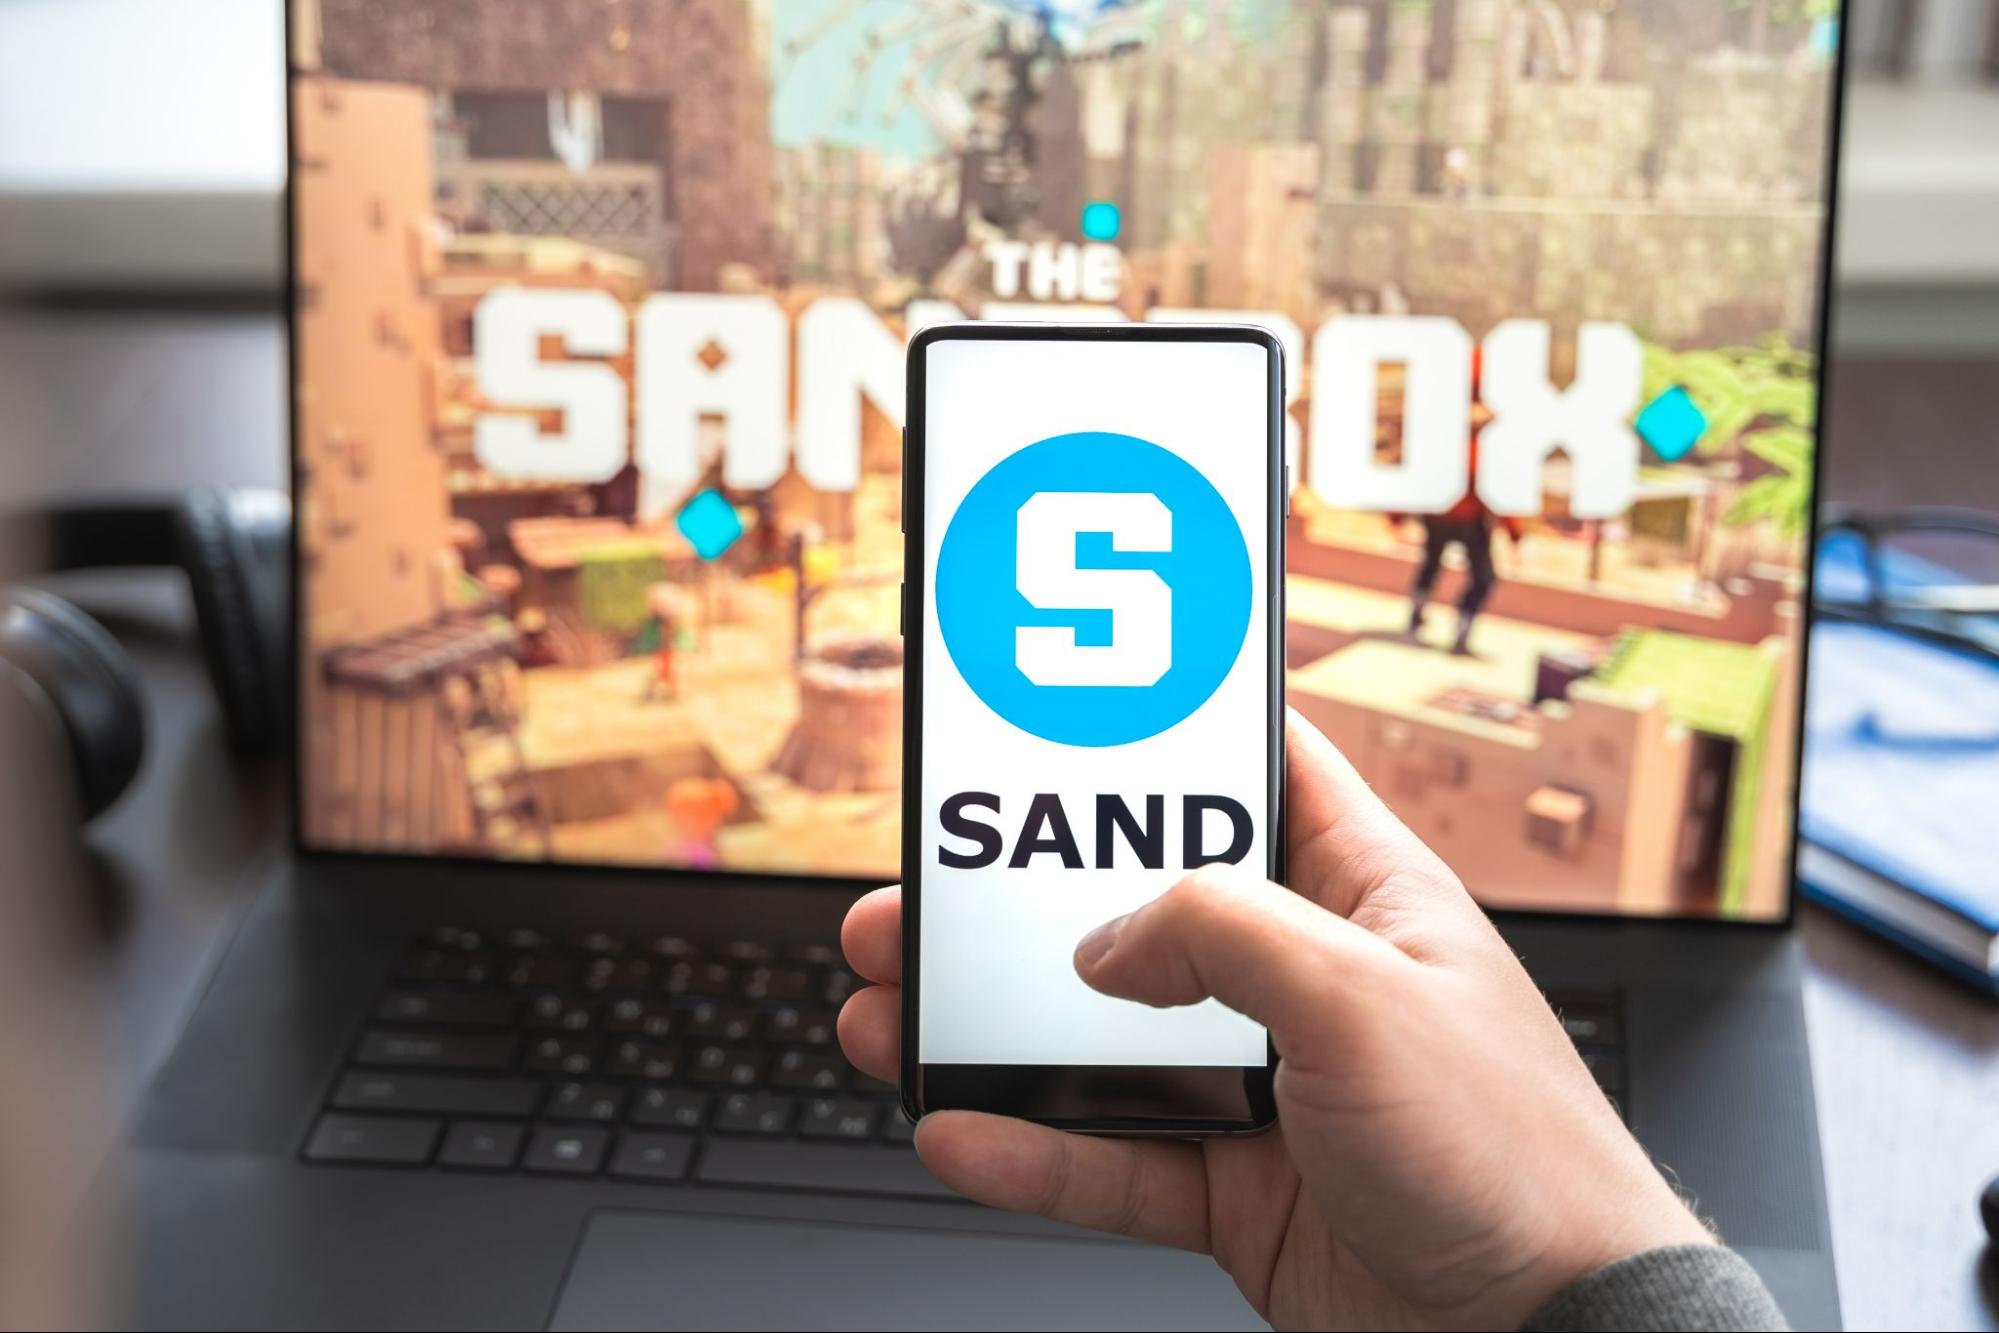 I motivi per comprare The Sandbox - image3 5ef8476153